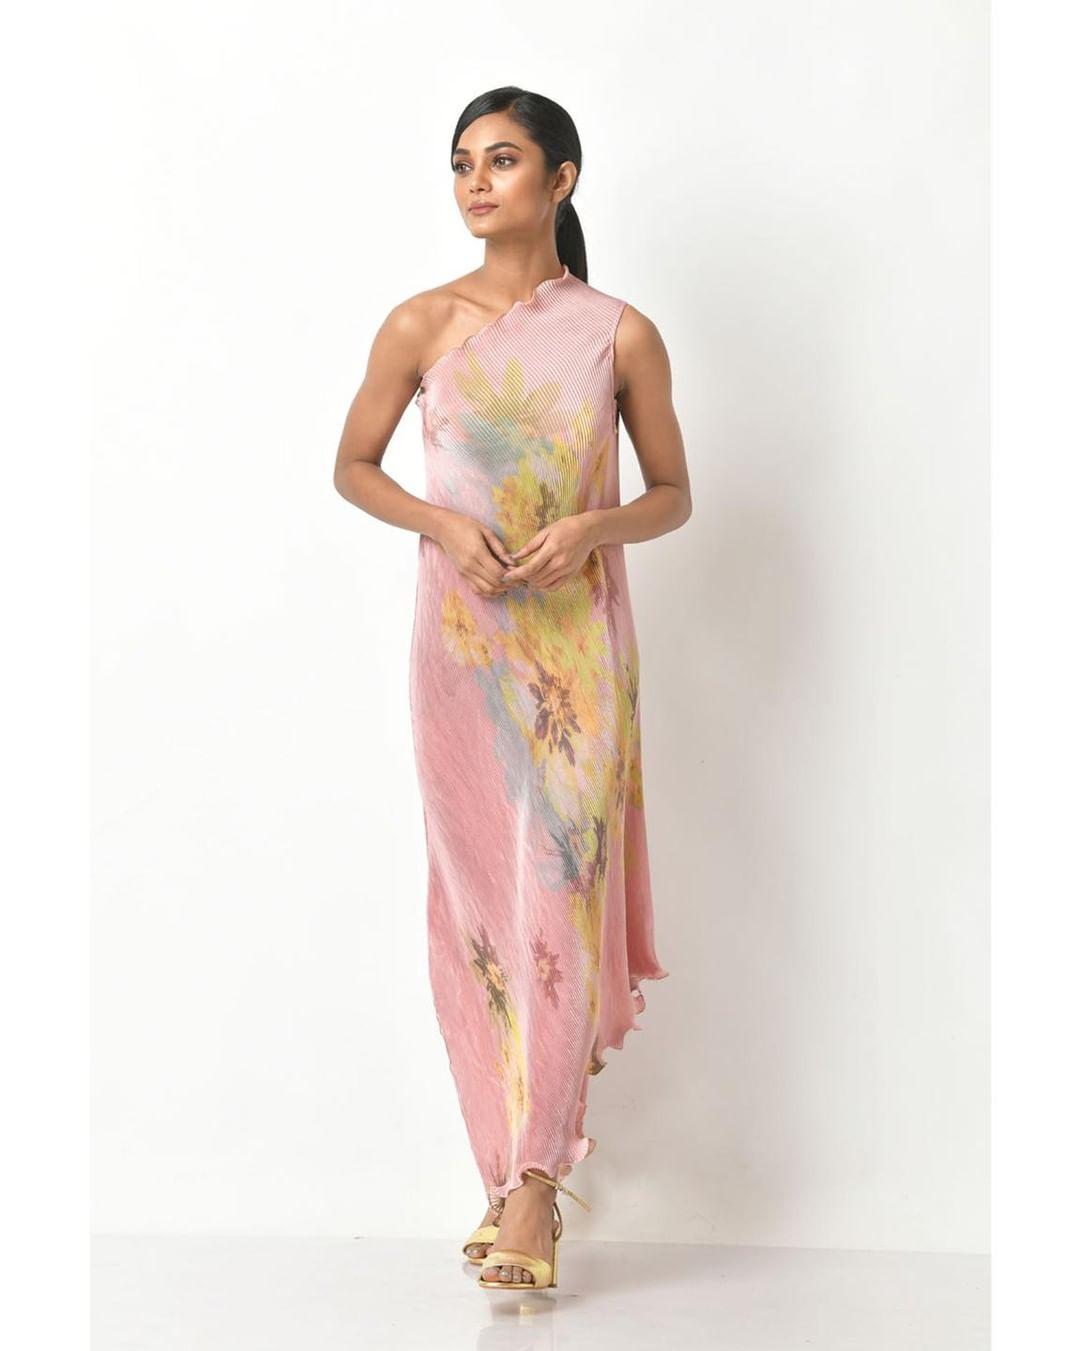 Dress Online: Buy Dresses for Women Online in India - Aachho